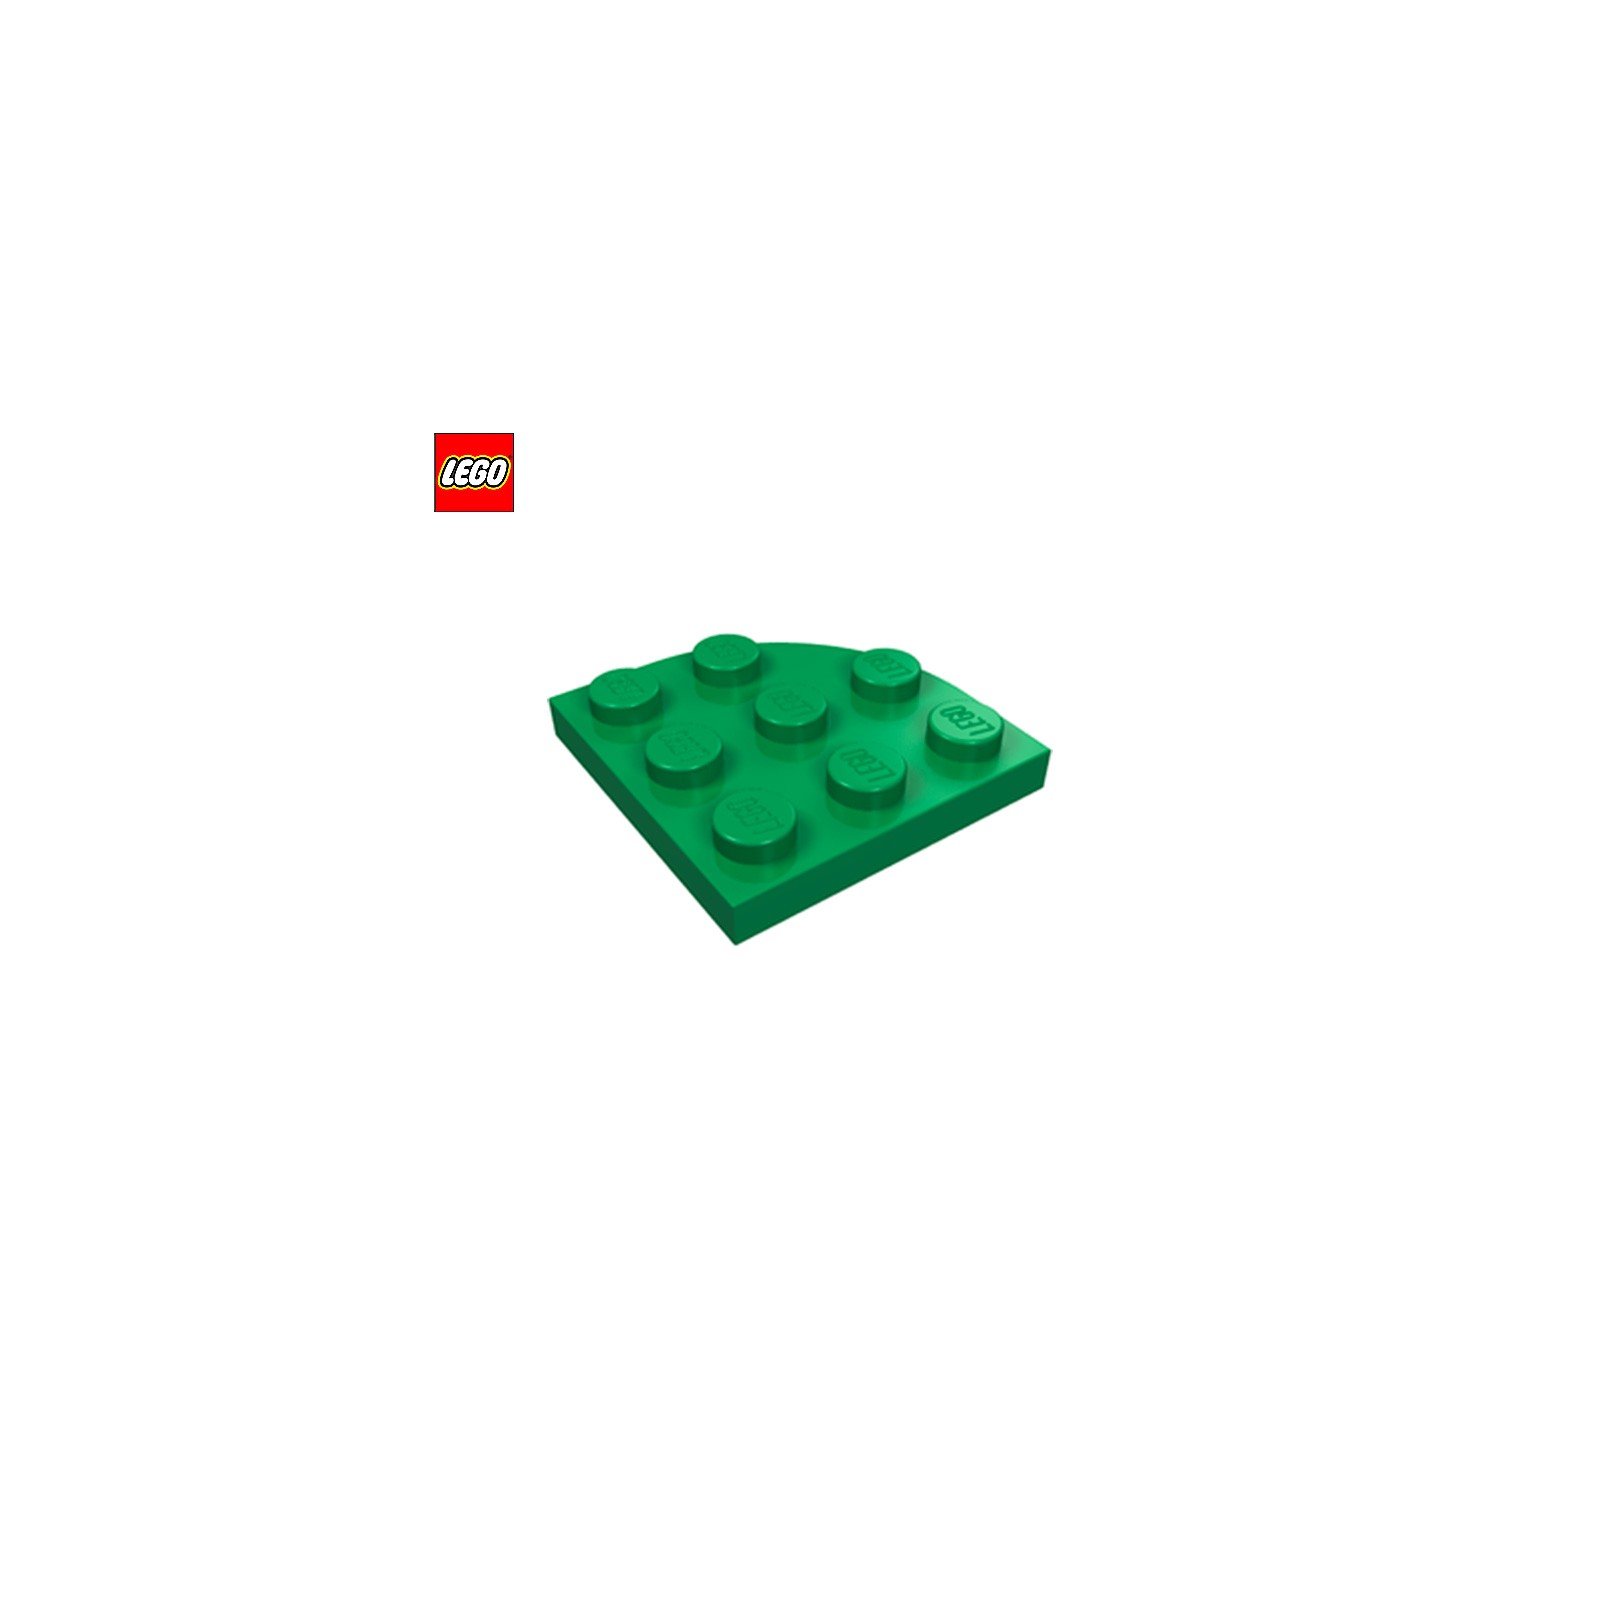 Plate 3x3 avec coin arrondi - Pièce LEGO® 30357